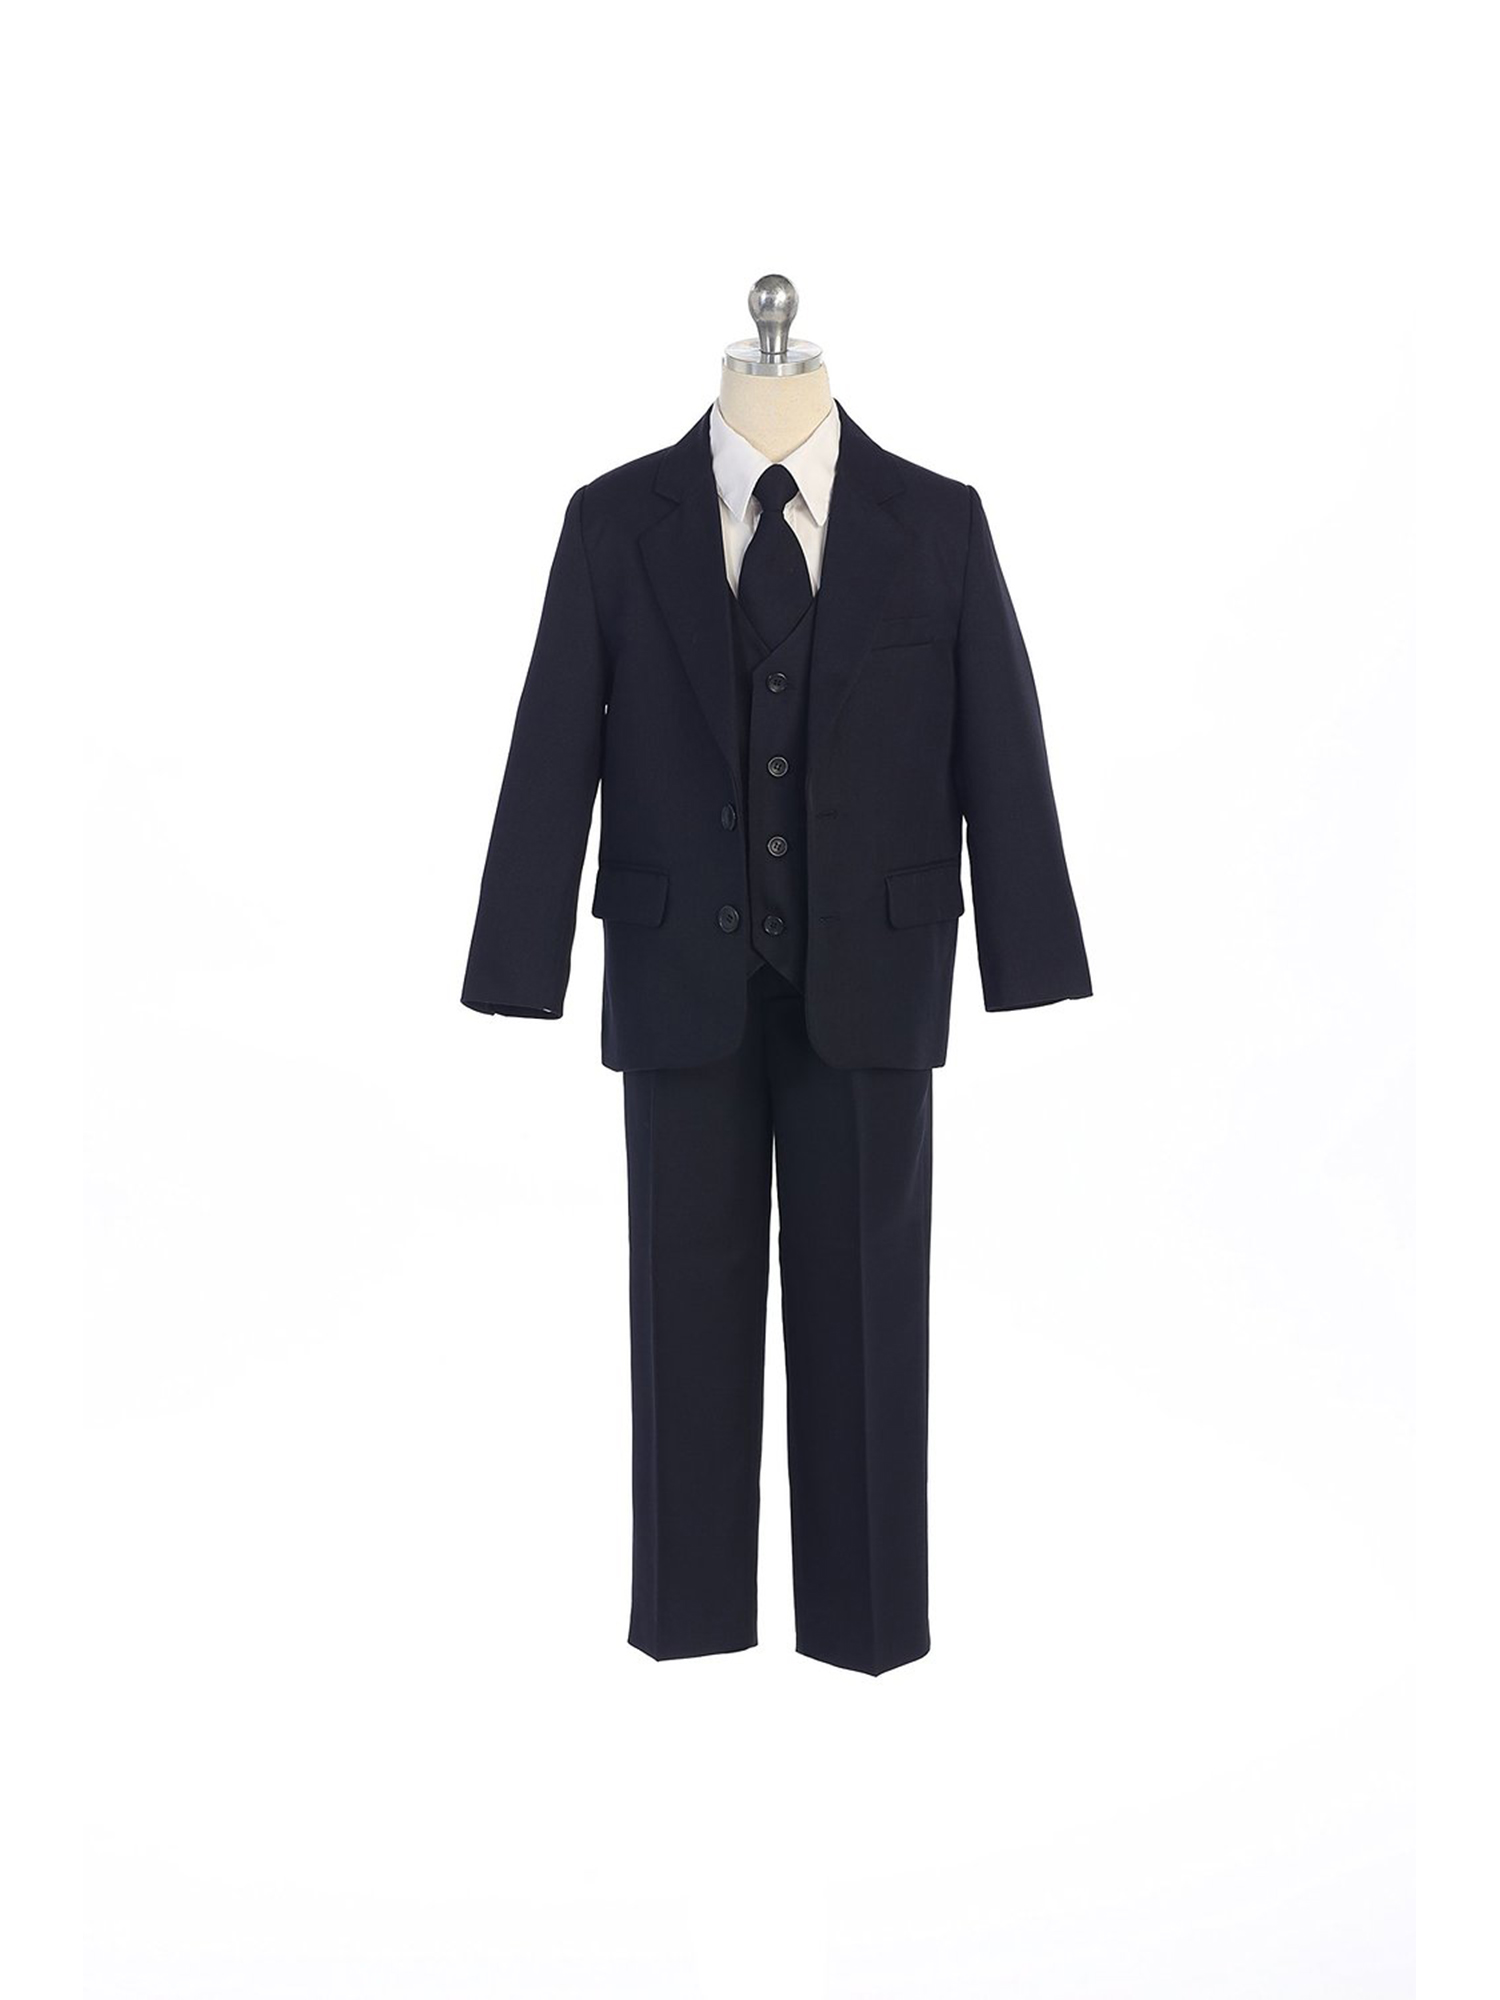 COLE Boys Suit with Shirt and Vest (5-Piece) - (14 Husky, Navy Blue)